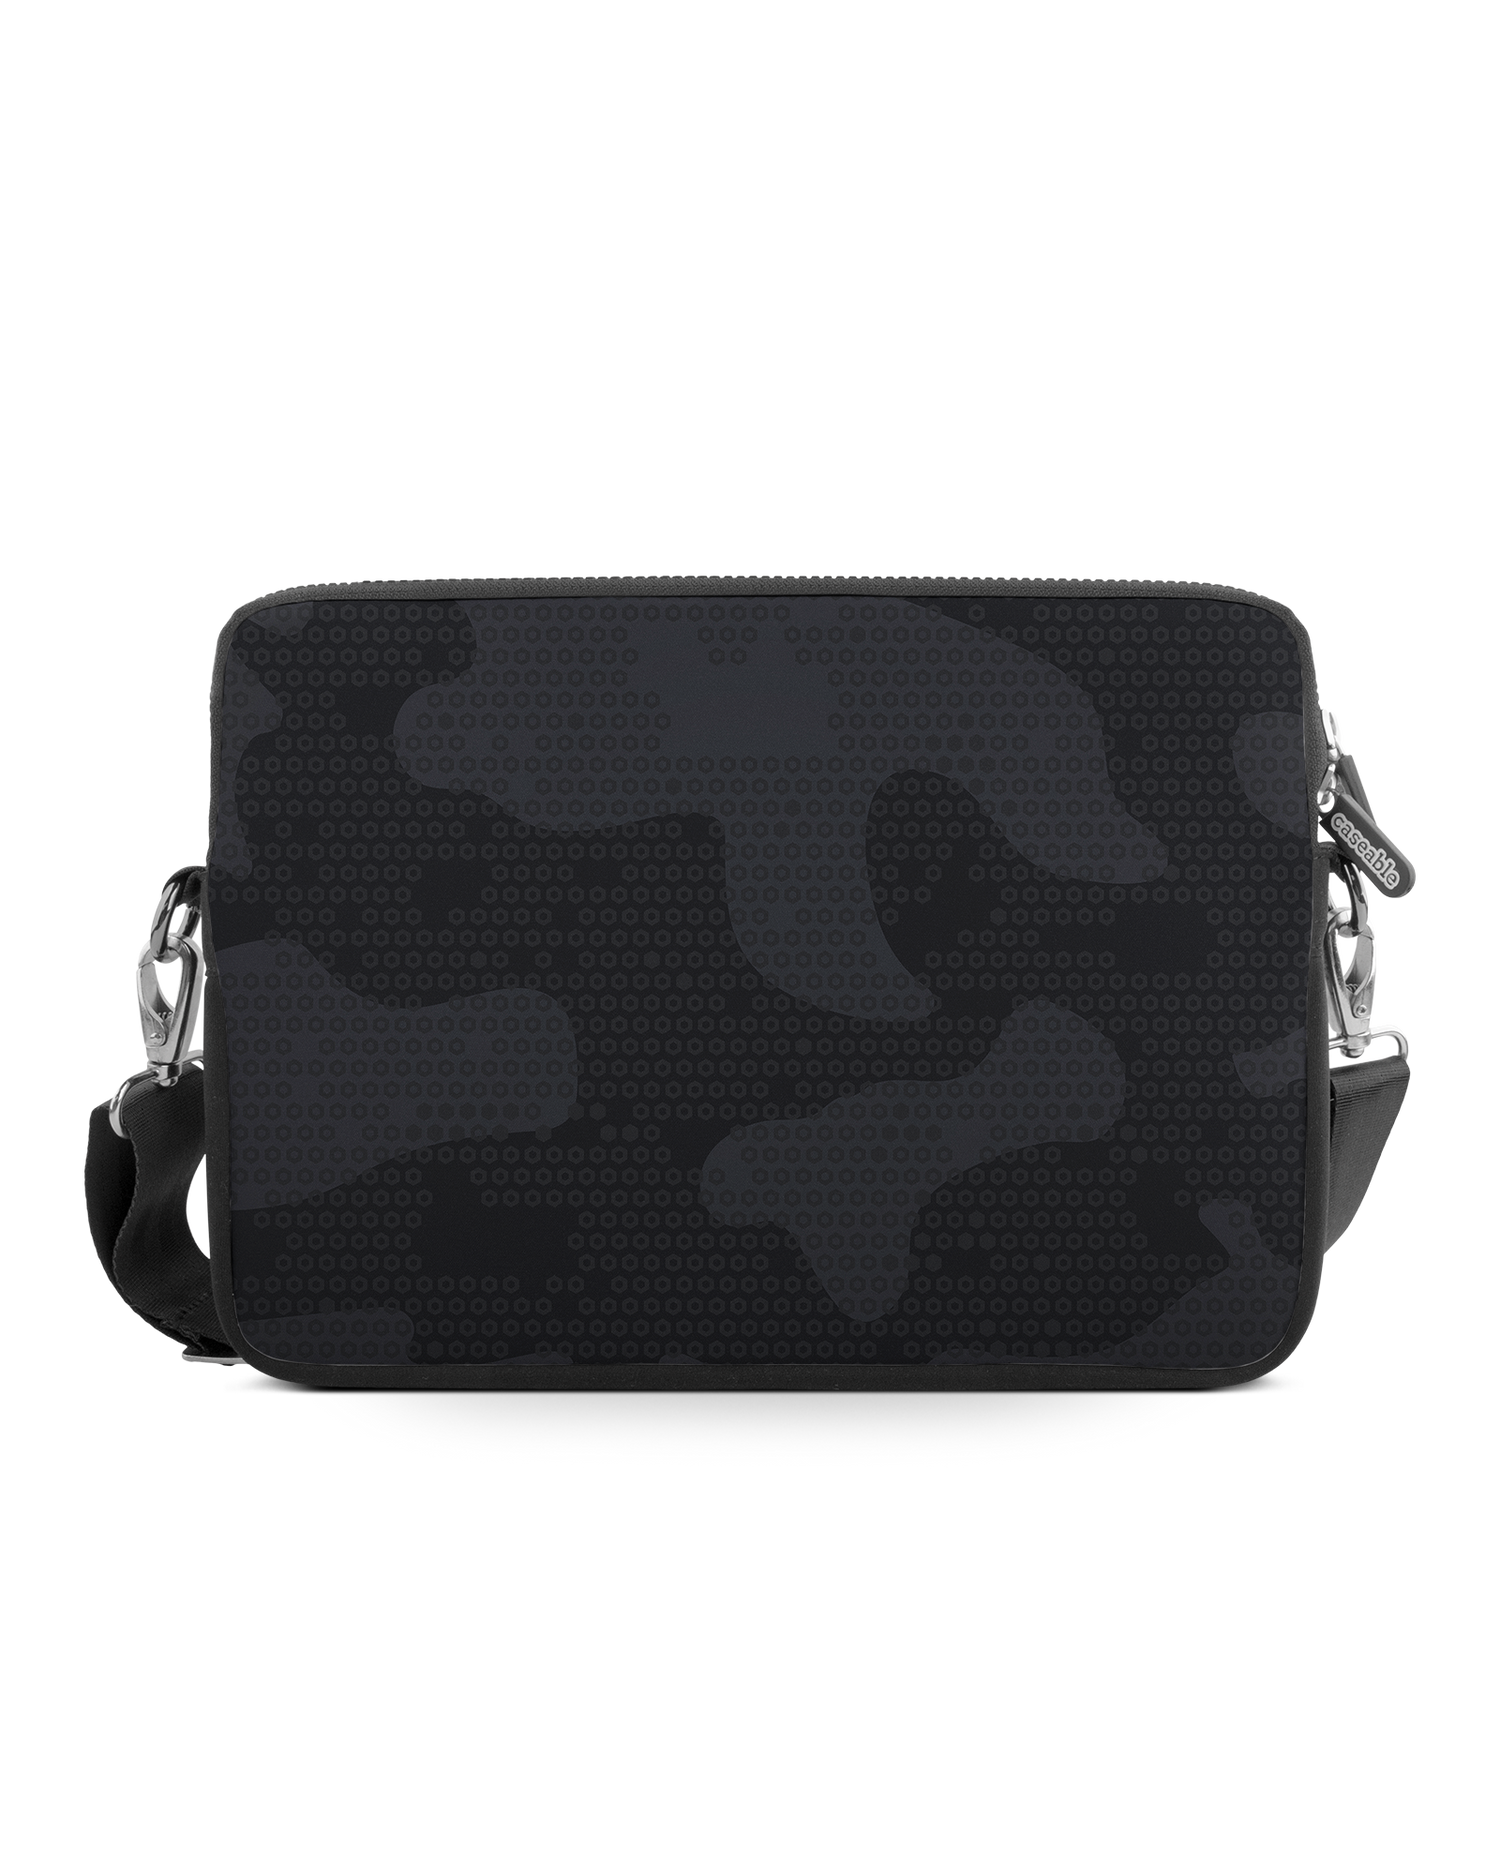 Spec Ops Dark Premium Laptop Bag 13 inch: Front View